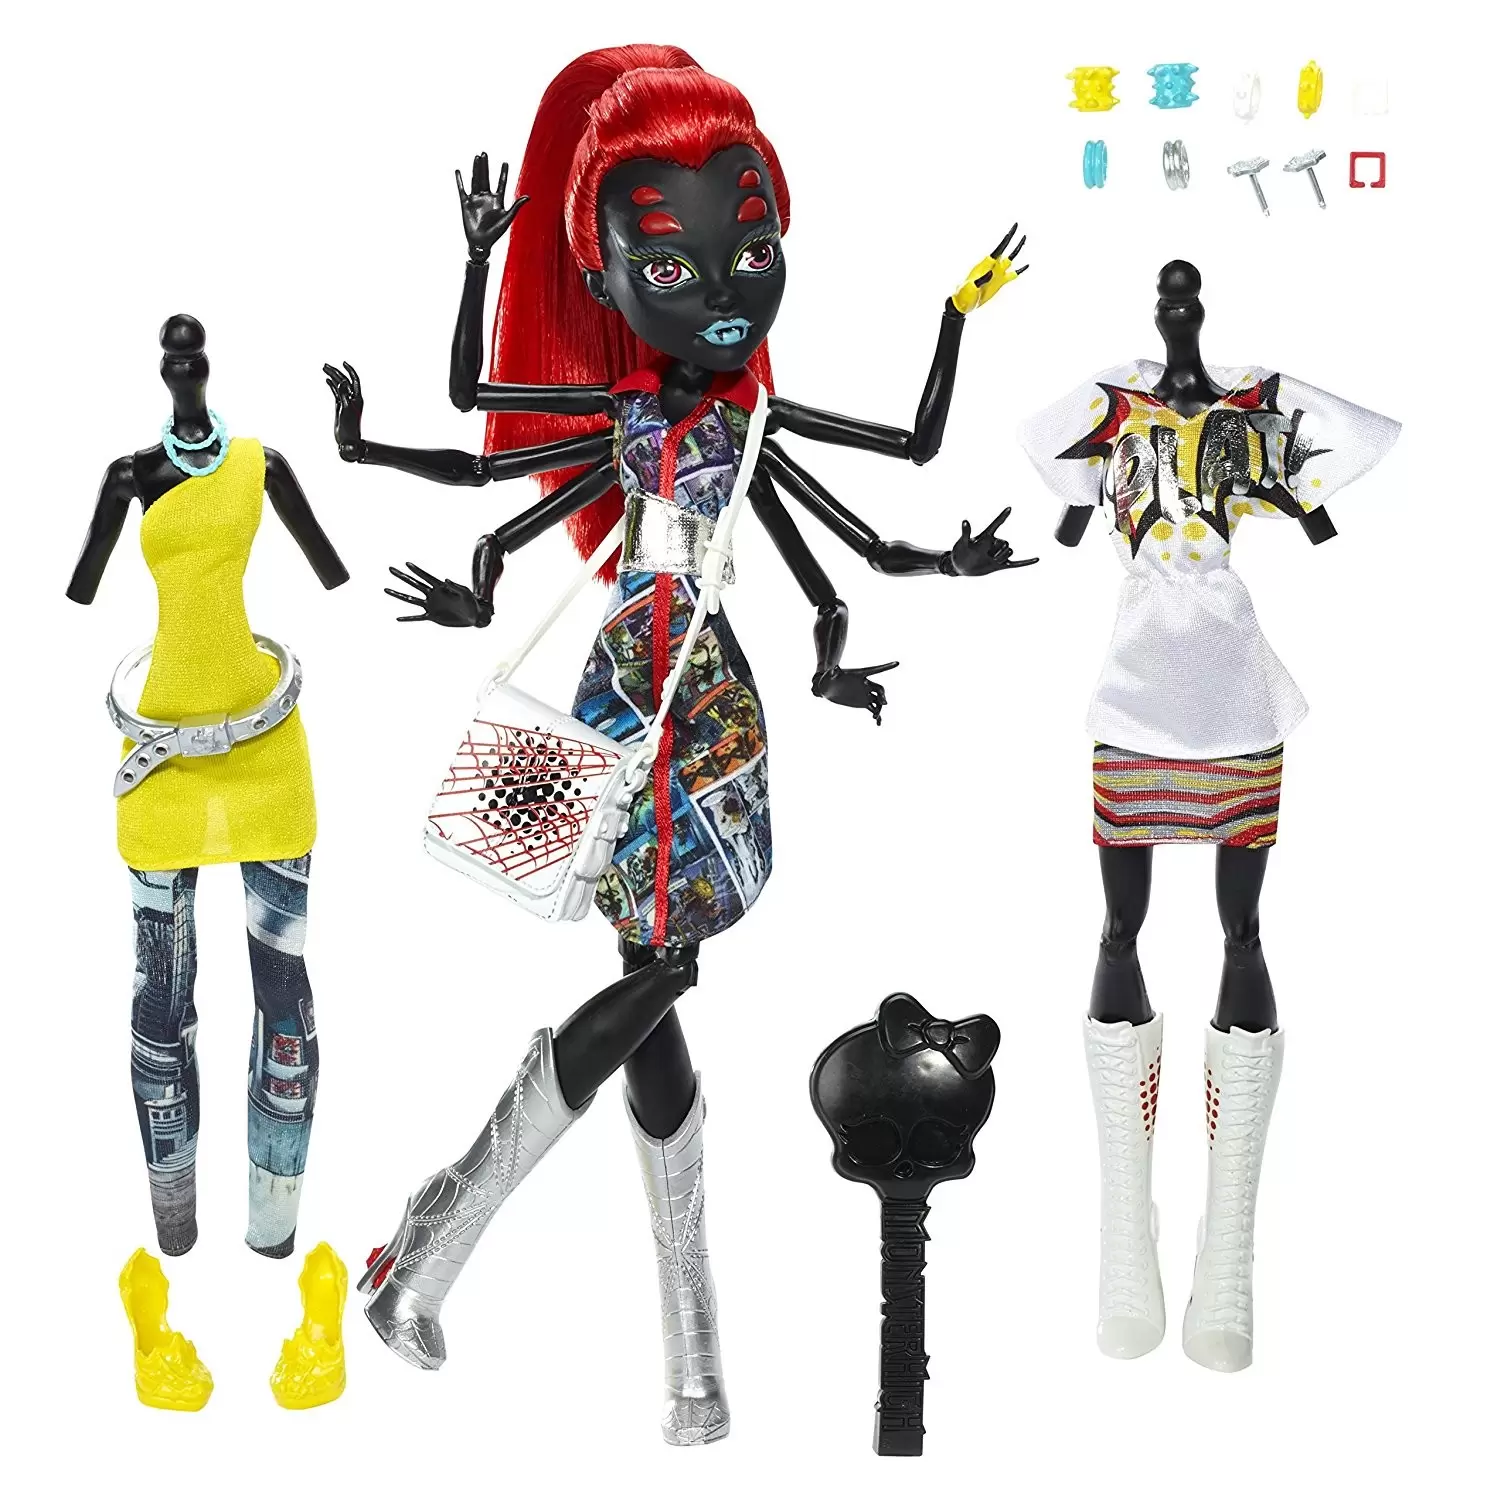 Monster High Dolls - Wydowna Spider - I Love Fashion